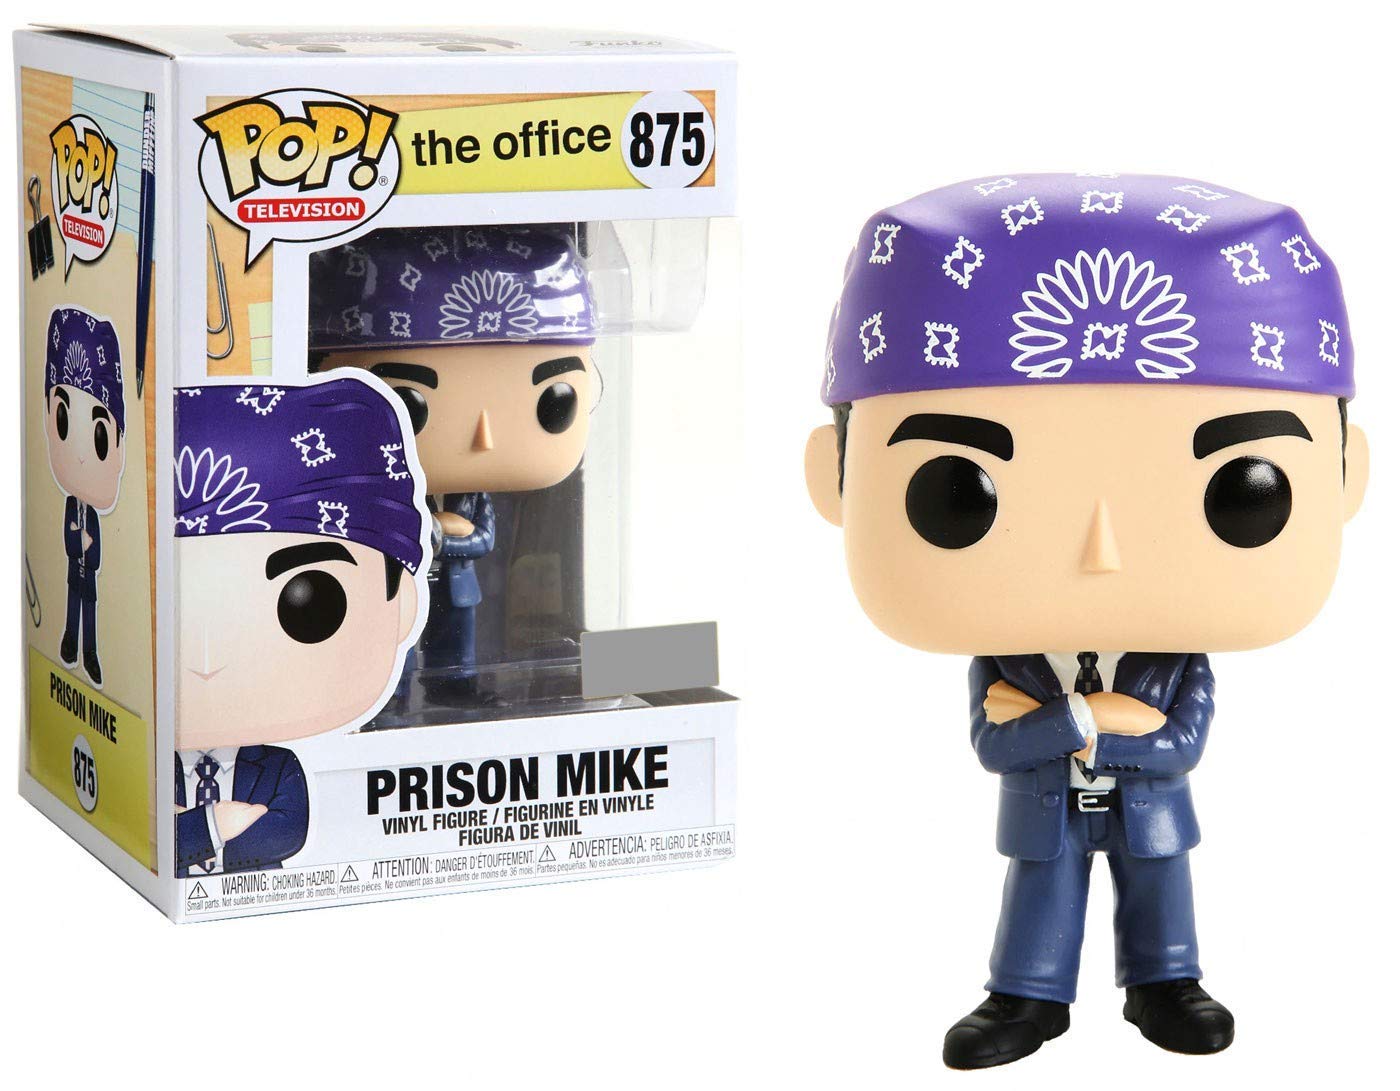 The Office: Prison Mike Pop! Vinyl Figure (875)